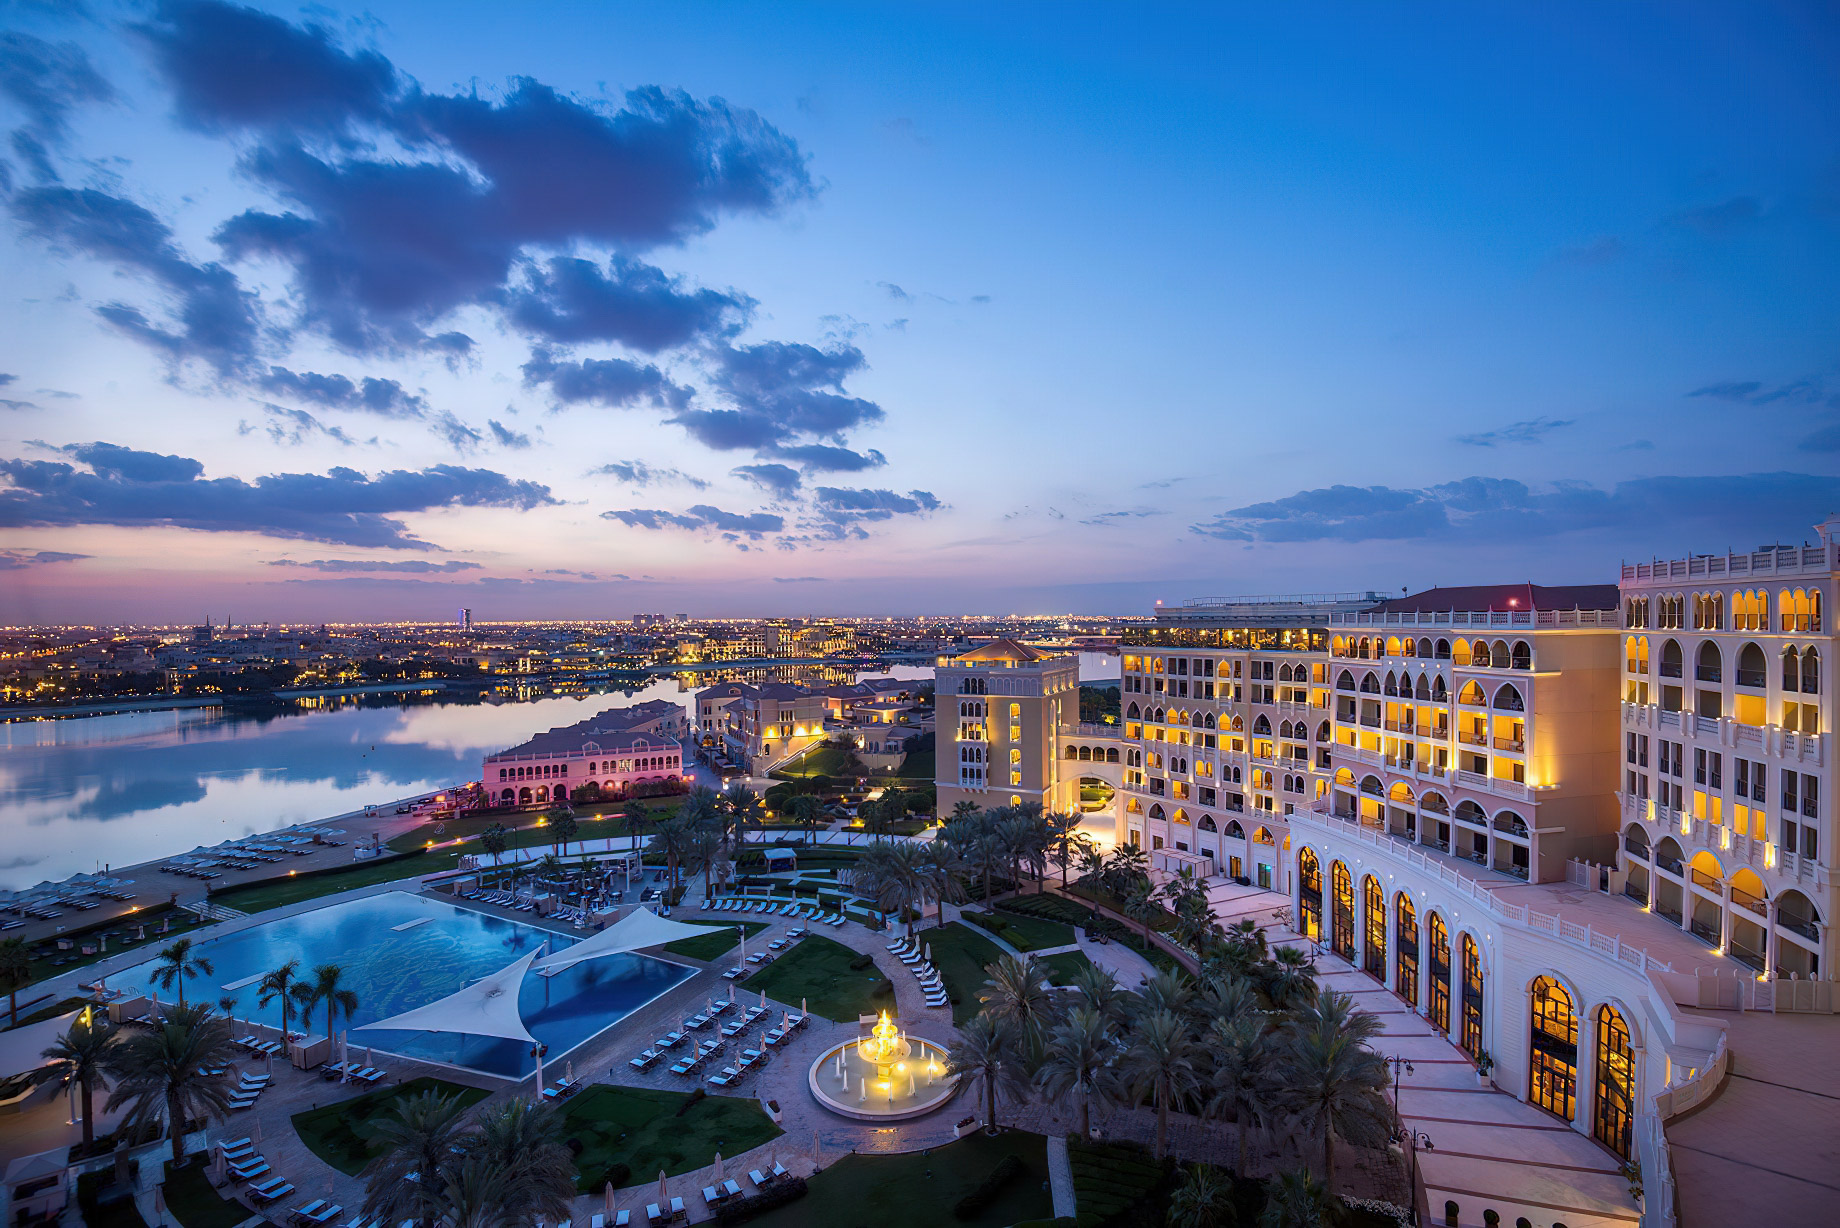 The Ritz-Carlton Abu Dhabi, Grand Canal Hotel – Abu Dhabi, UAE – Hotel Exterior Night Pool View